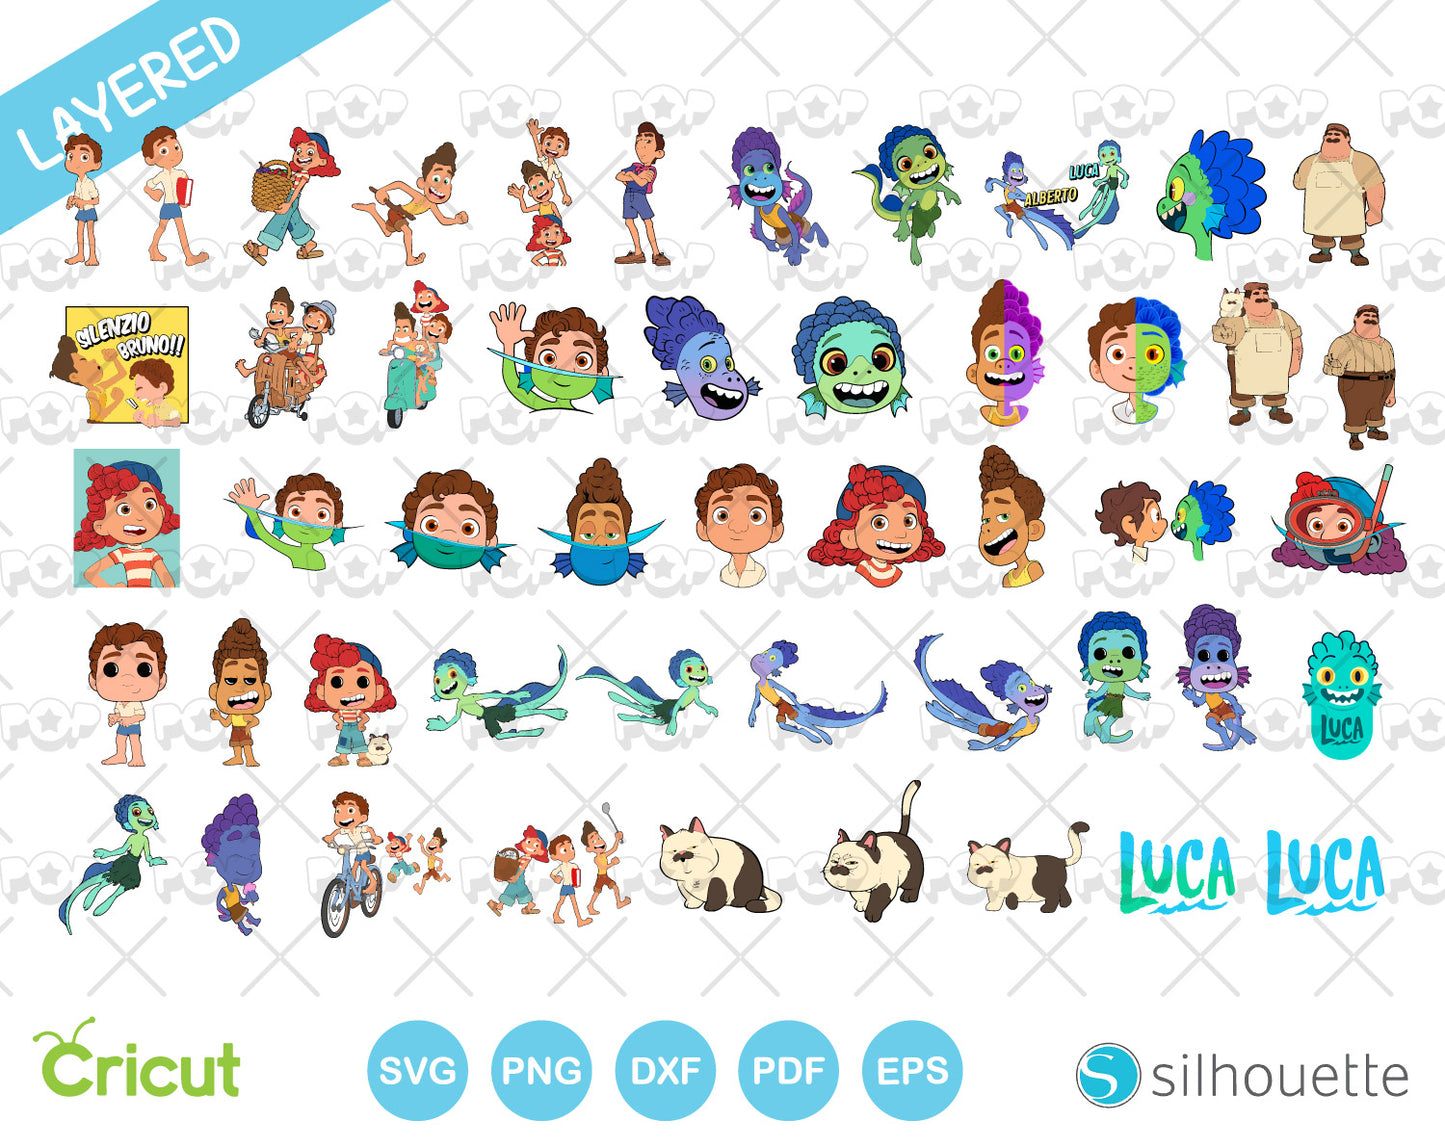 Luca 100 cliparts bundle, Disney Luca SVG cut files for Cricut Silhouette, PNG DXF, instant download